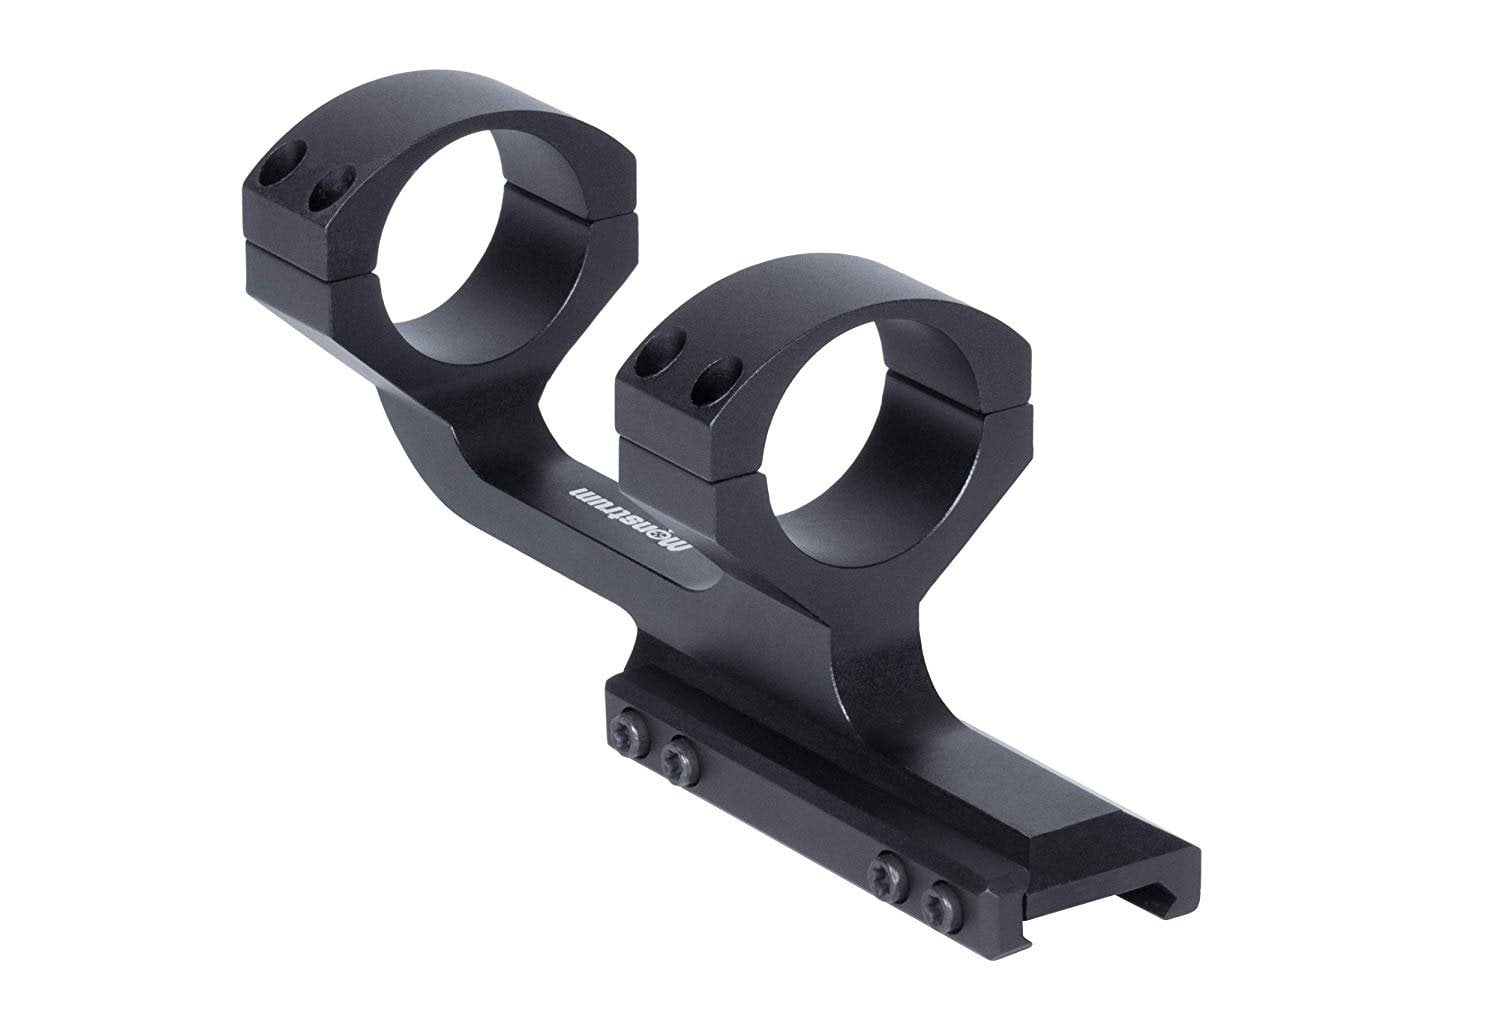 TACFUN 30mm Scope Rings for Picatinny Rail 2pcs High Profile + 2pcs Low Profile - Pack of 4 